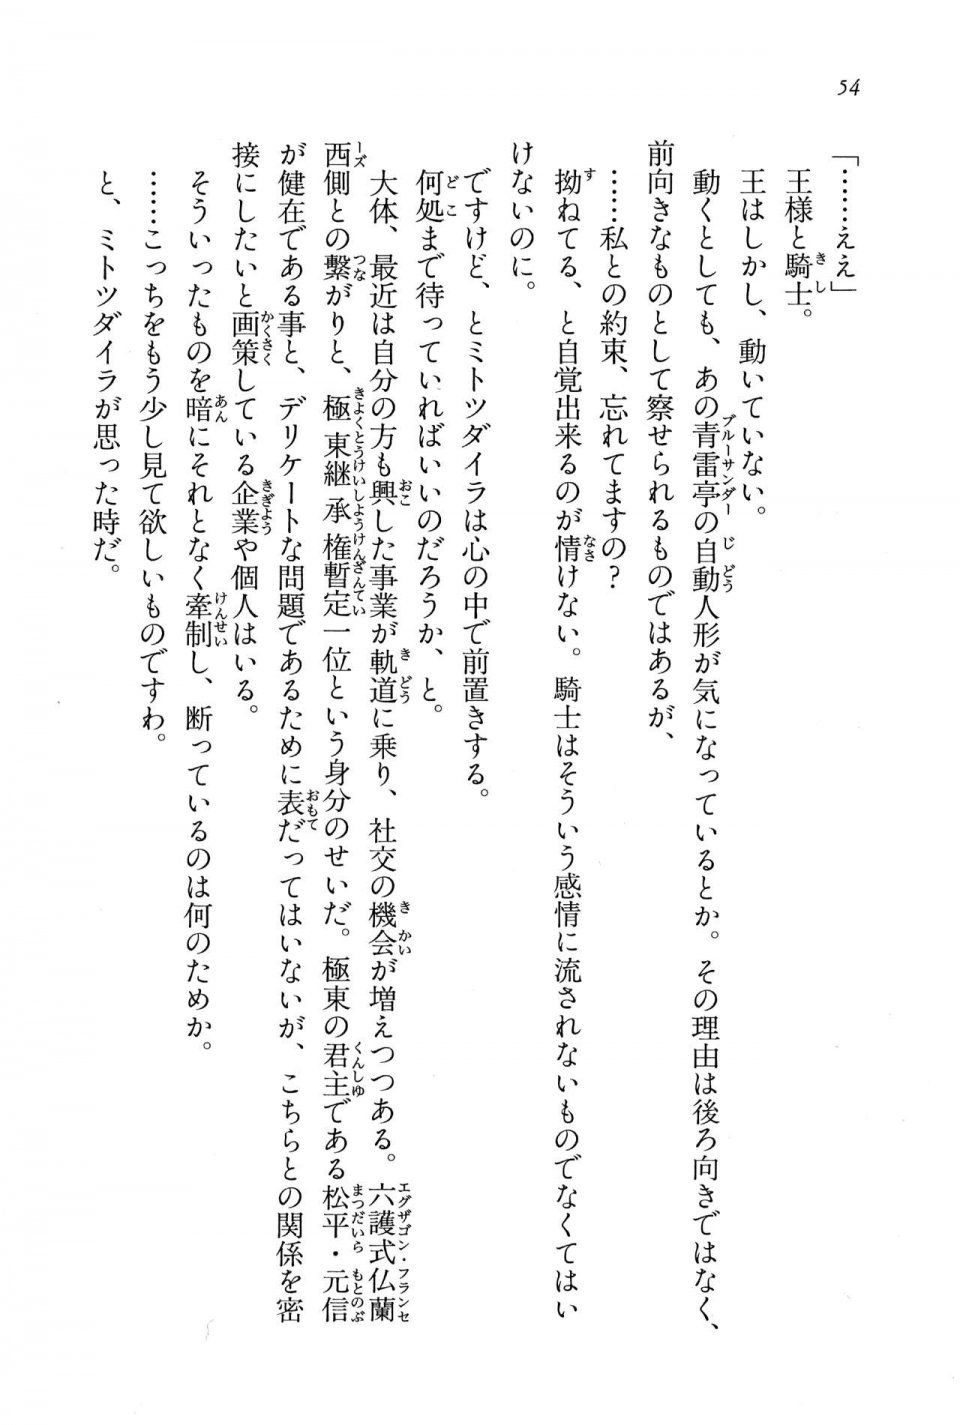 Kyoukai Senjou no Horizon BD Special Mininovel Vol 7(4A) - Photo #58